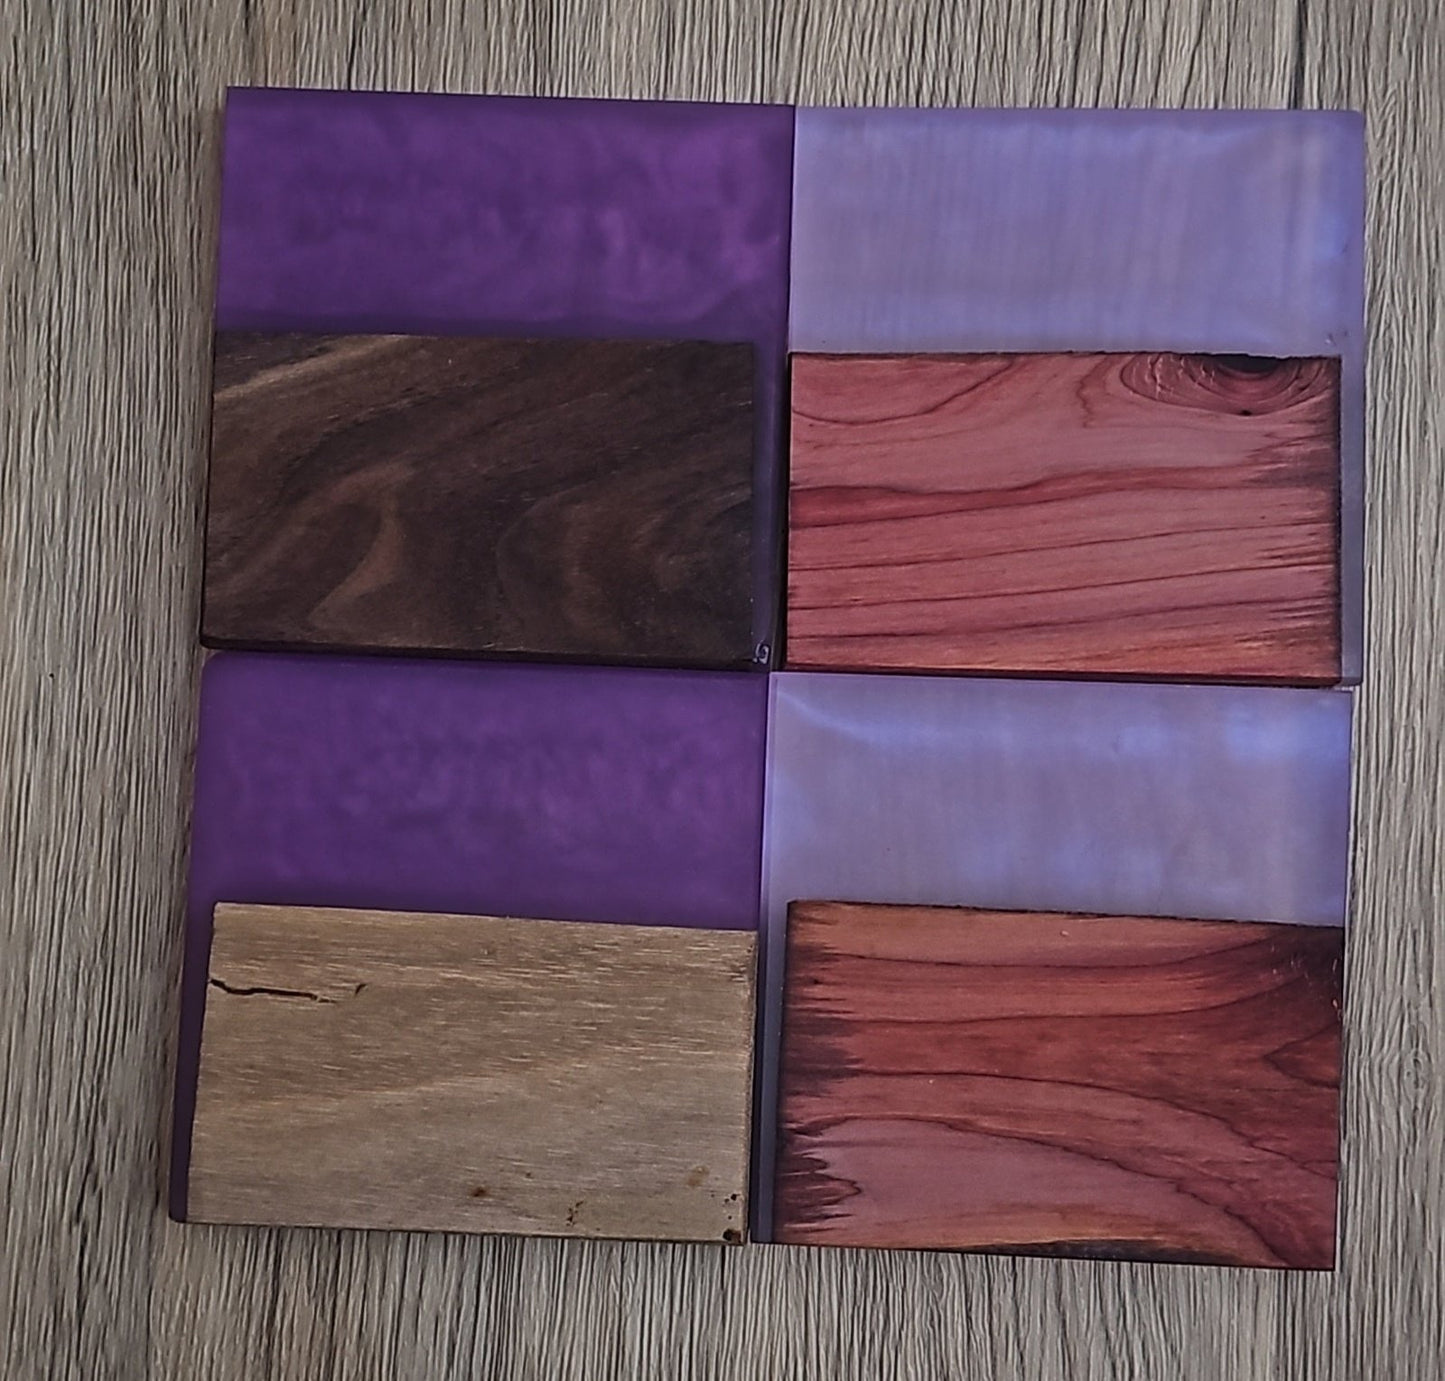 Mix Wood with Violet / Violet Blue Epoxy Coaster